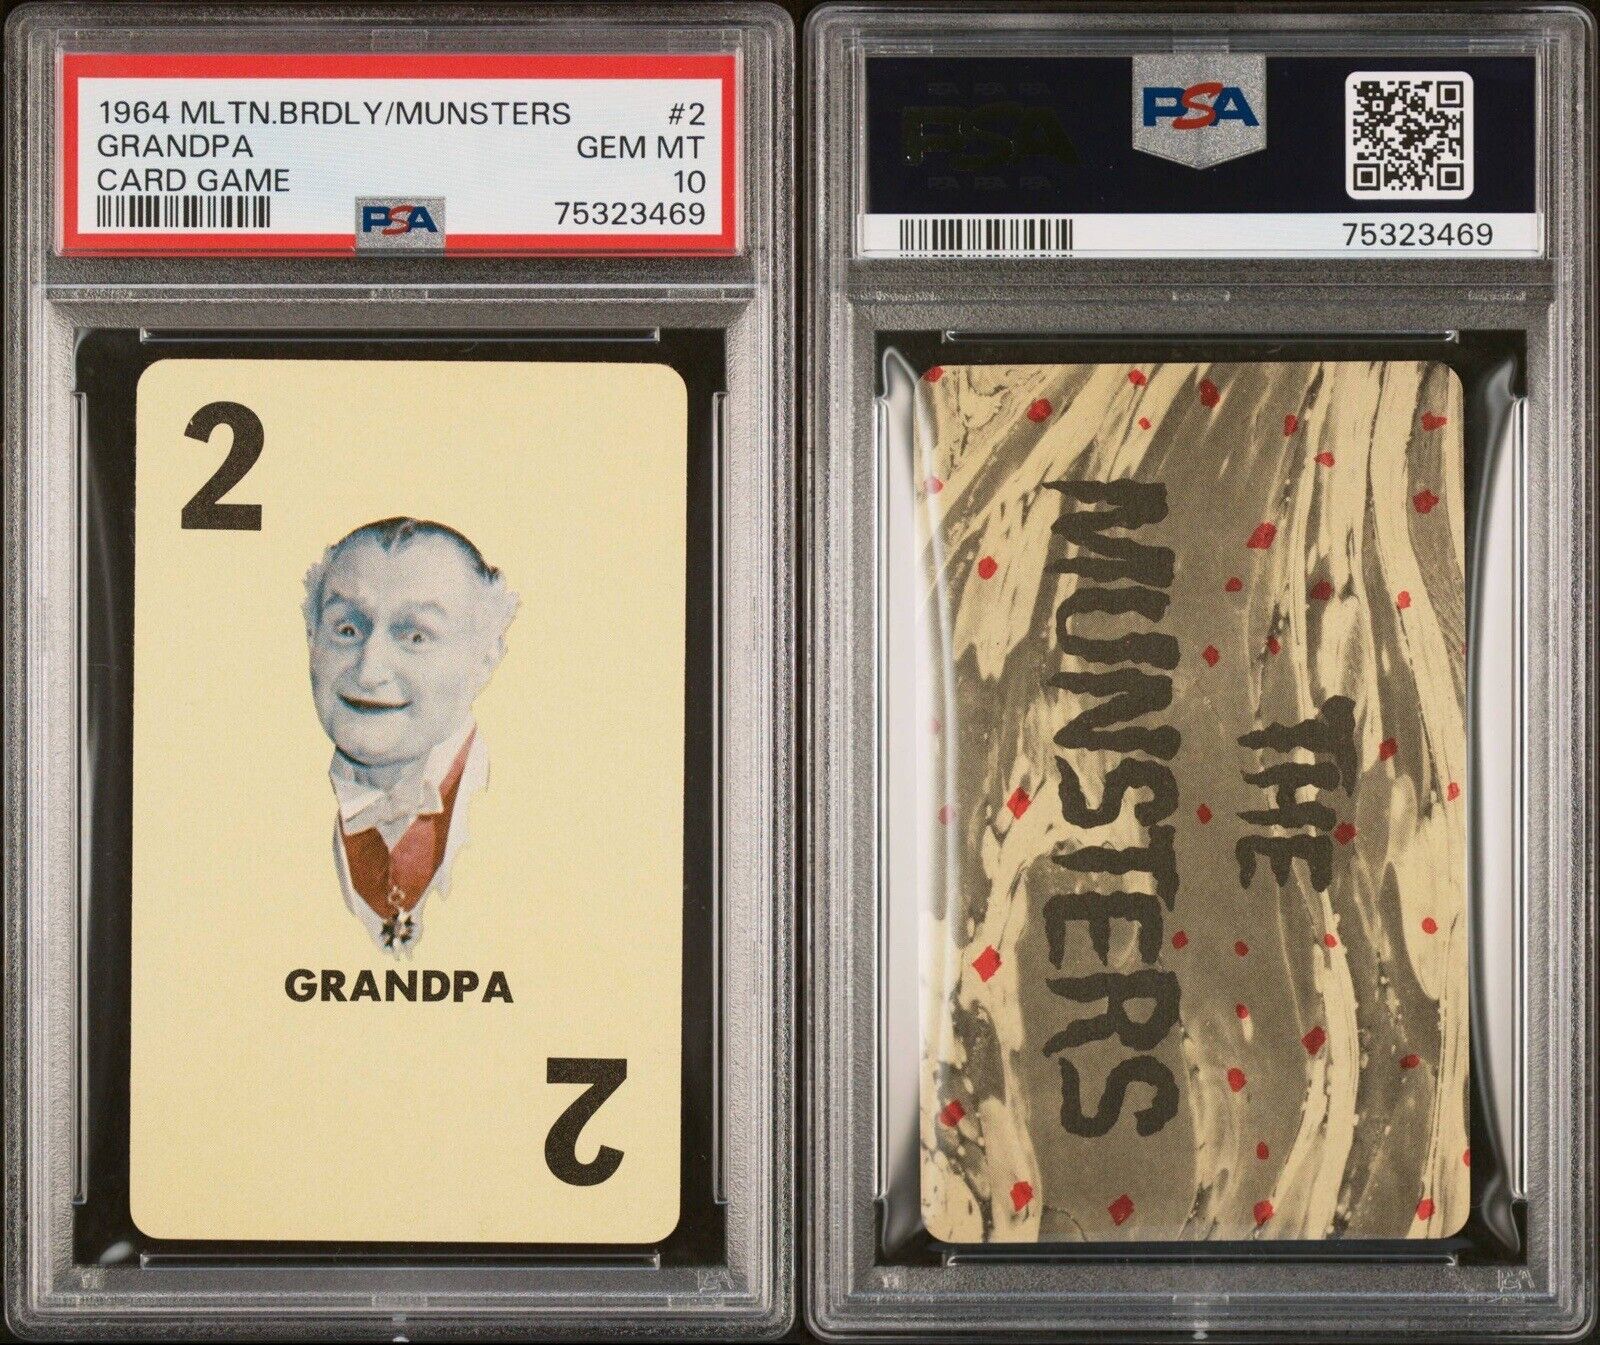 VINTAGE 1964 MILTON BRADLEY MUNSTERS GRANDPA CARD GAME ROOKIE PSA 10 GEM MINT